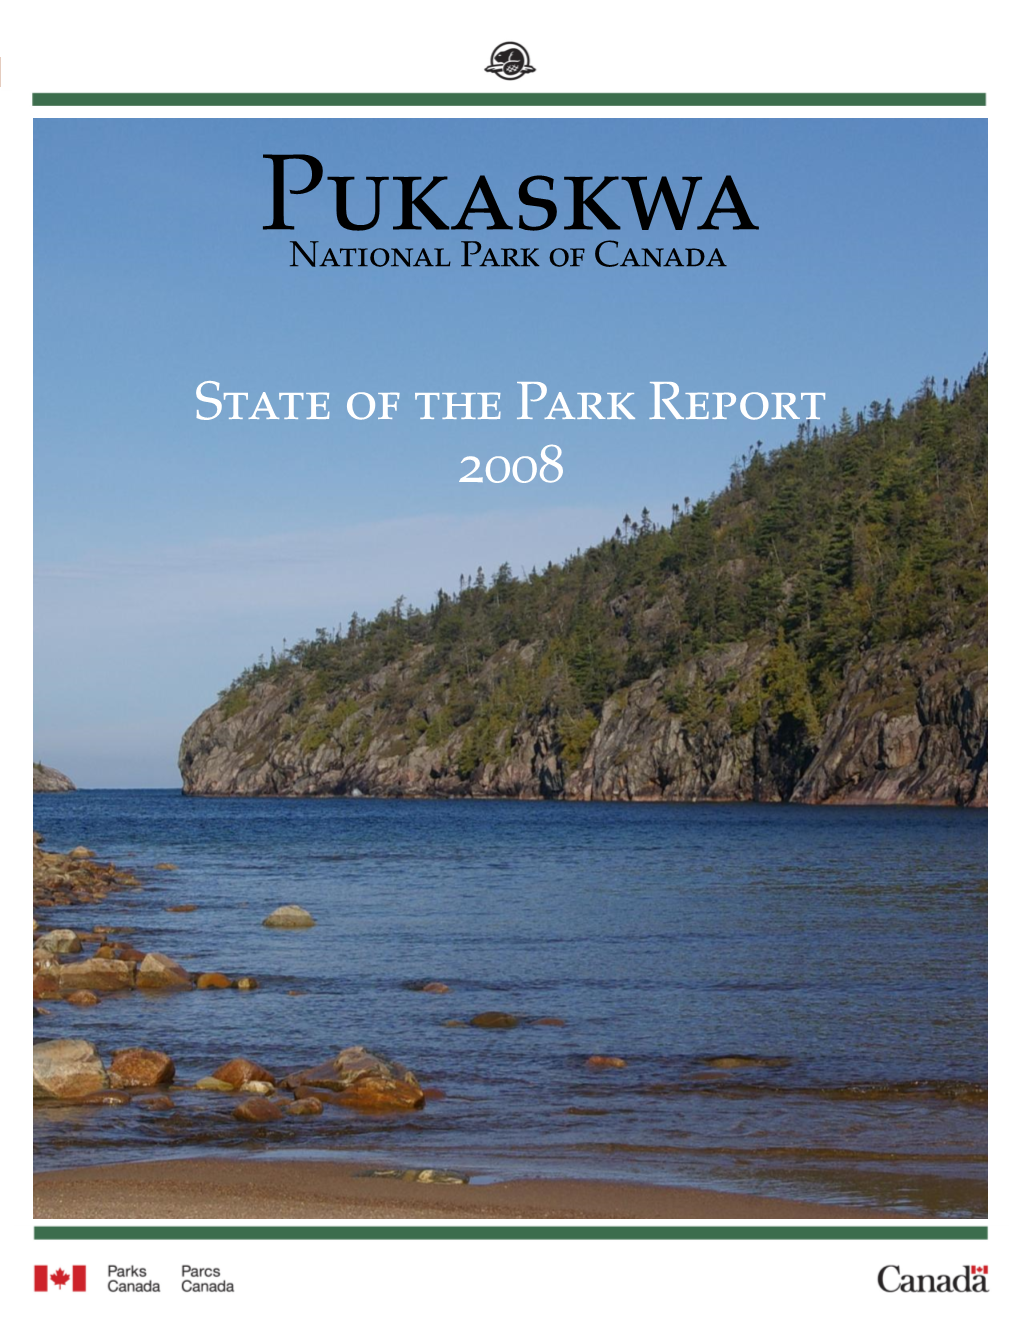 Pukaskwa National Park of Canada